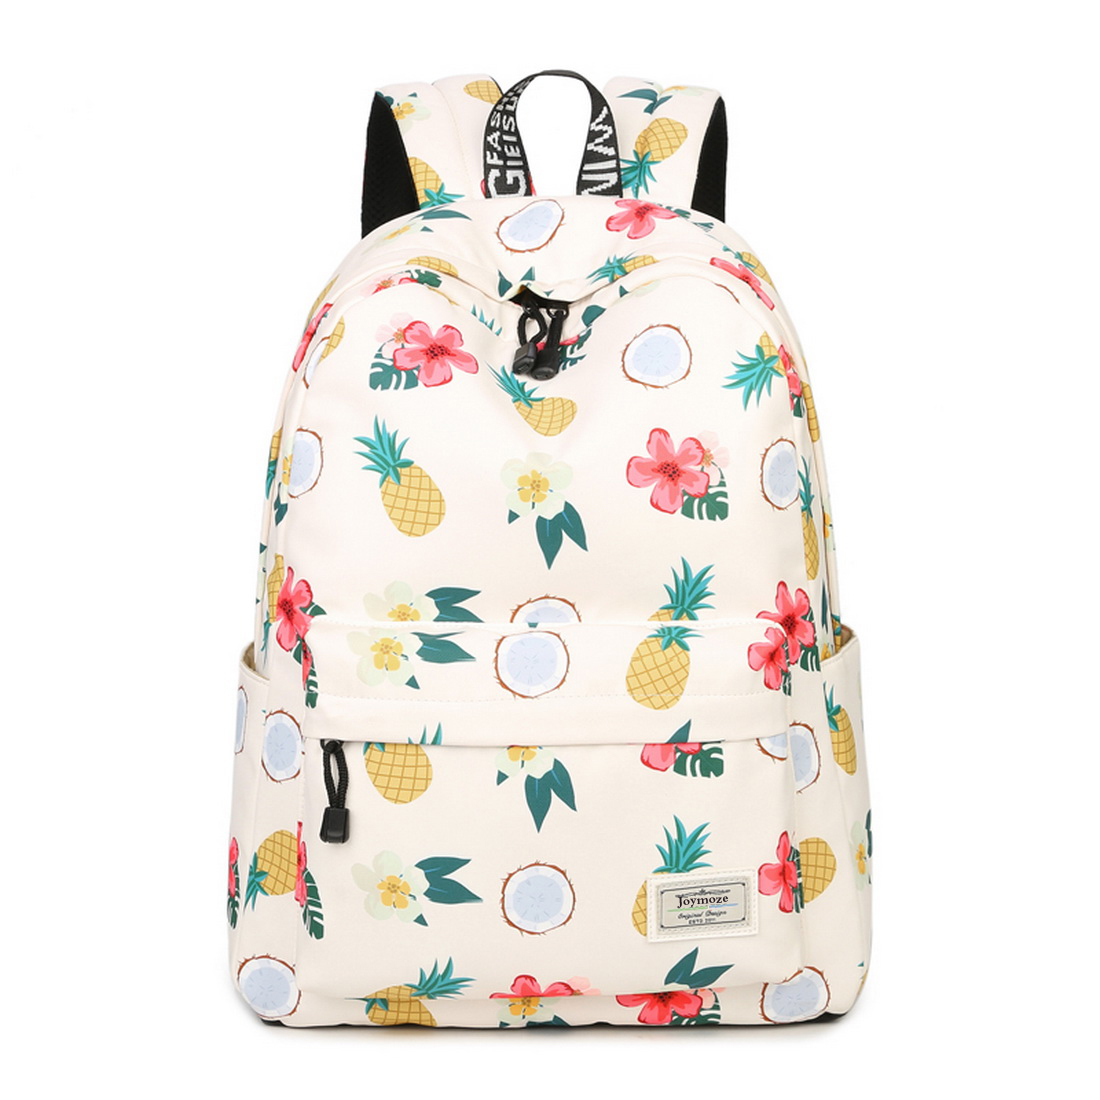 Joymoze Girl's Water-Proof School Backpack for Middle School Cute Bookbag Daypack for Women Fruit 843